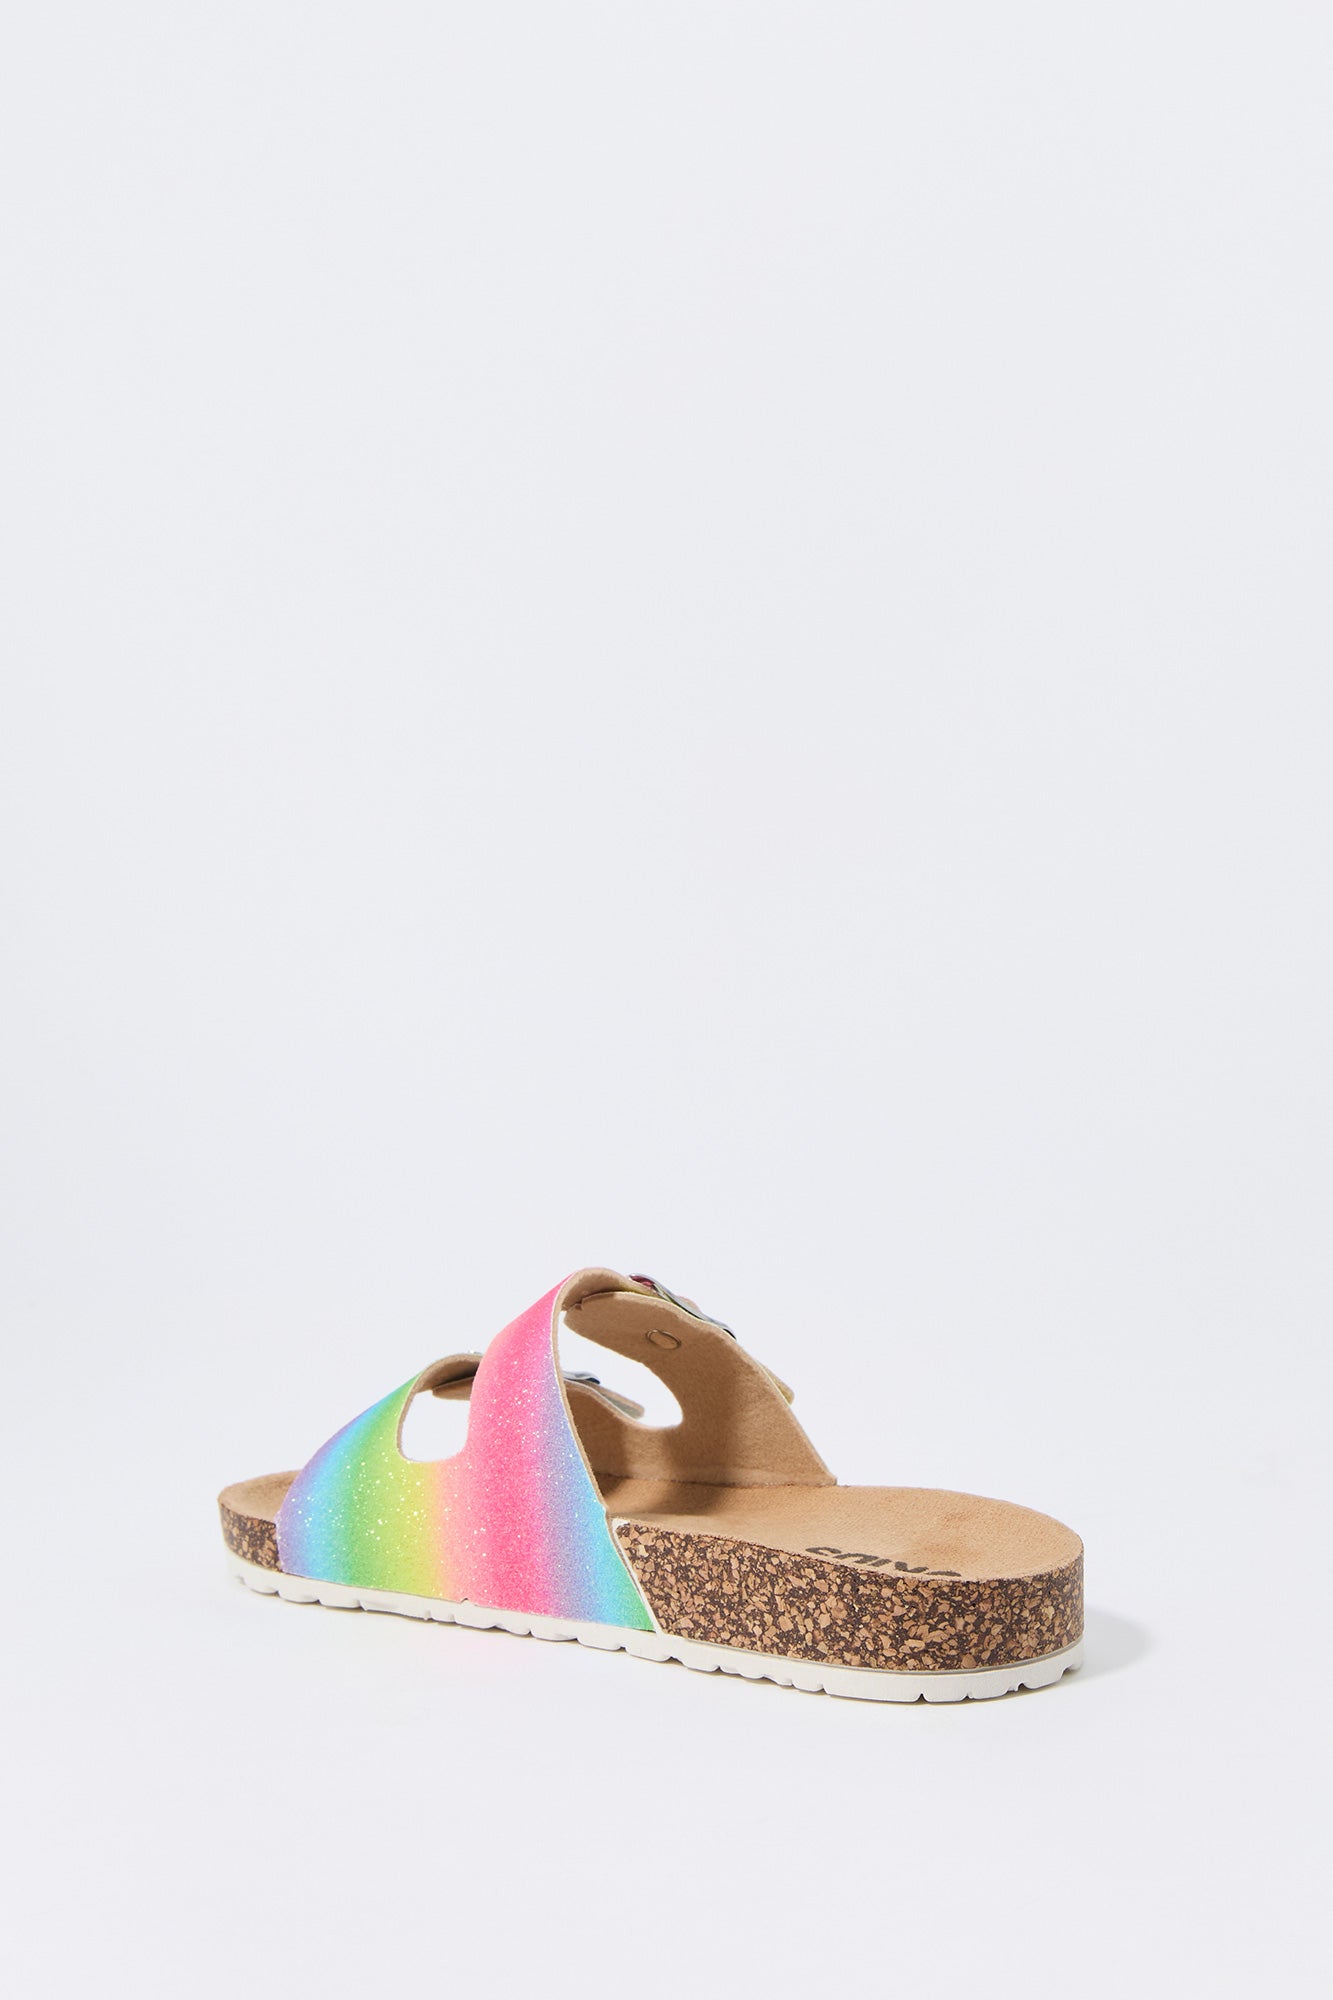 Girls Sparkle Rainbow Print Buckled Cork Sandal